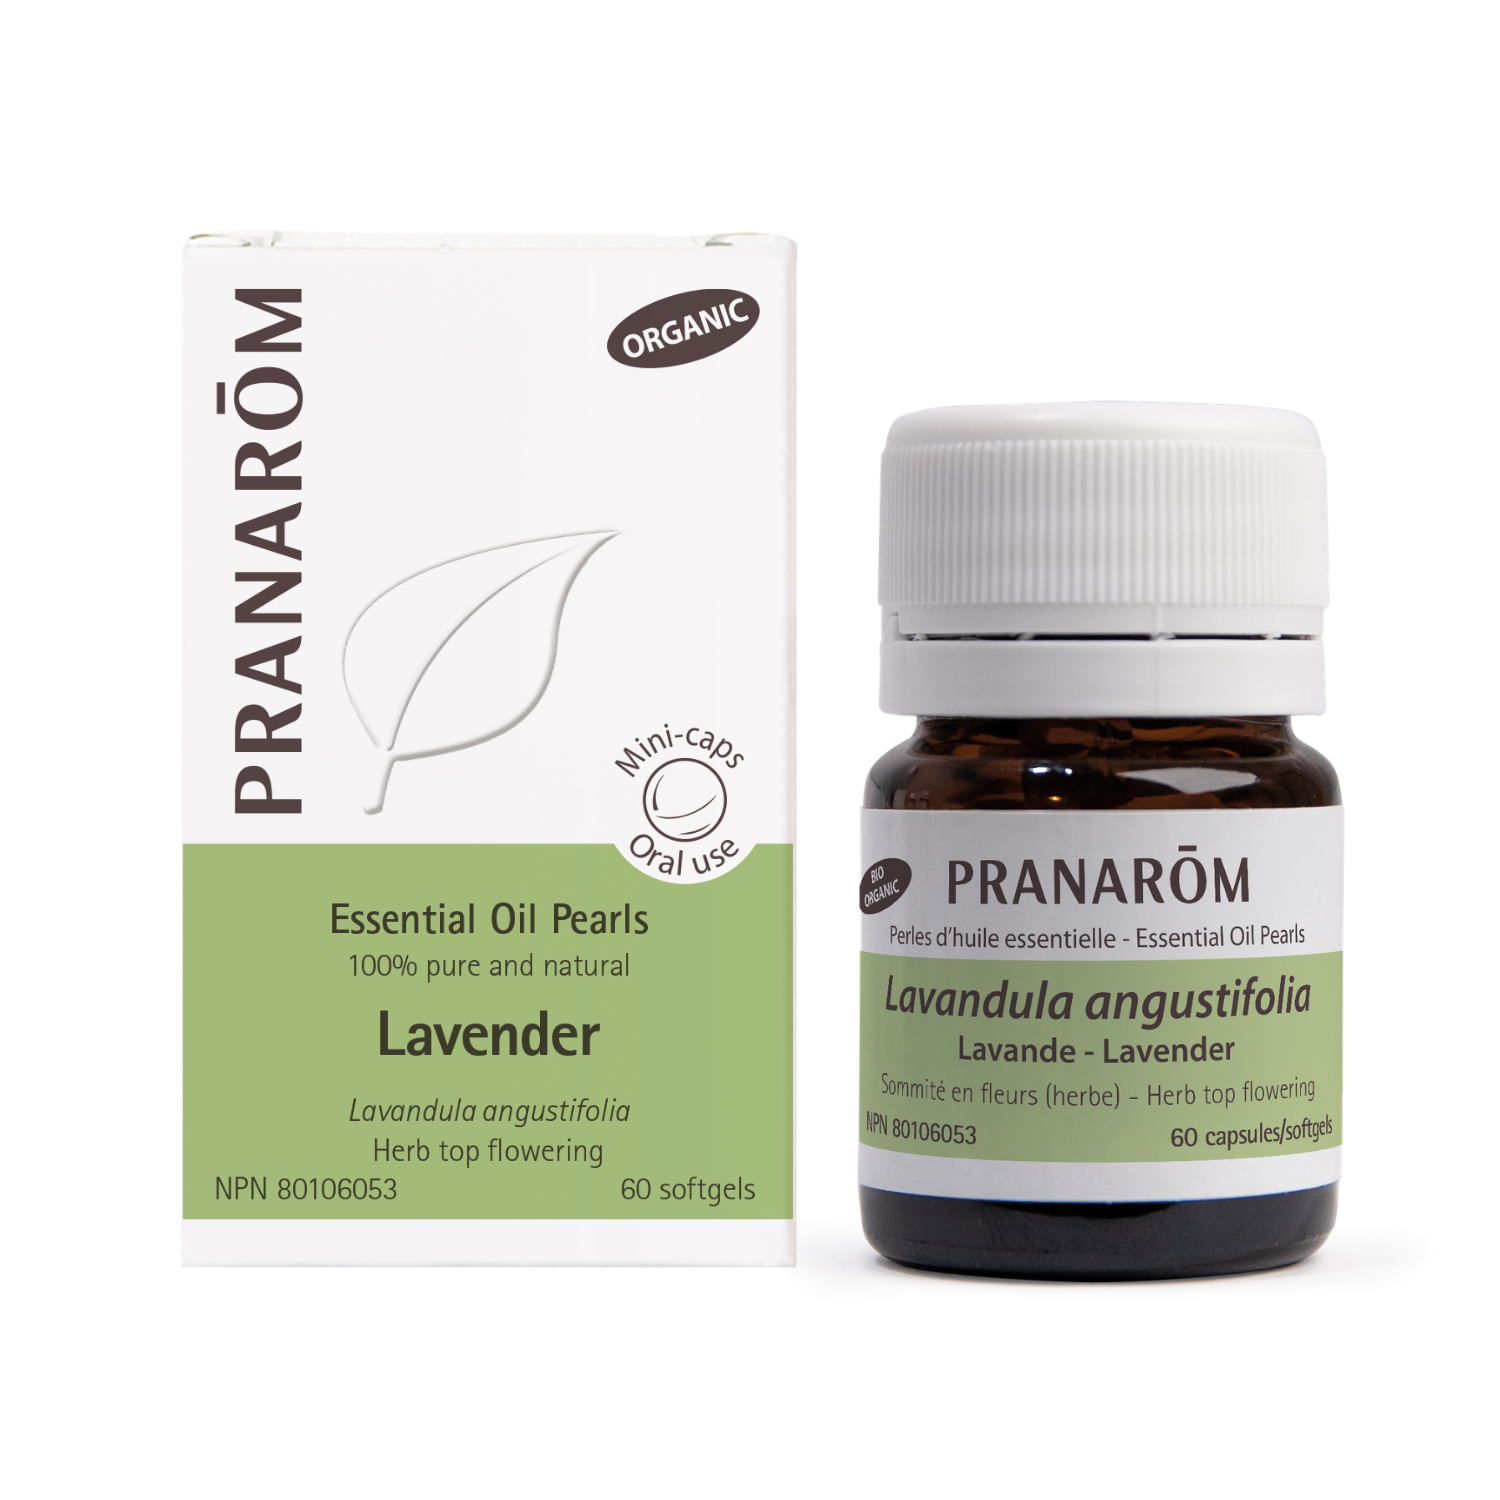 PRANAROM Essential Oil Pearls Lavender   60 softgels